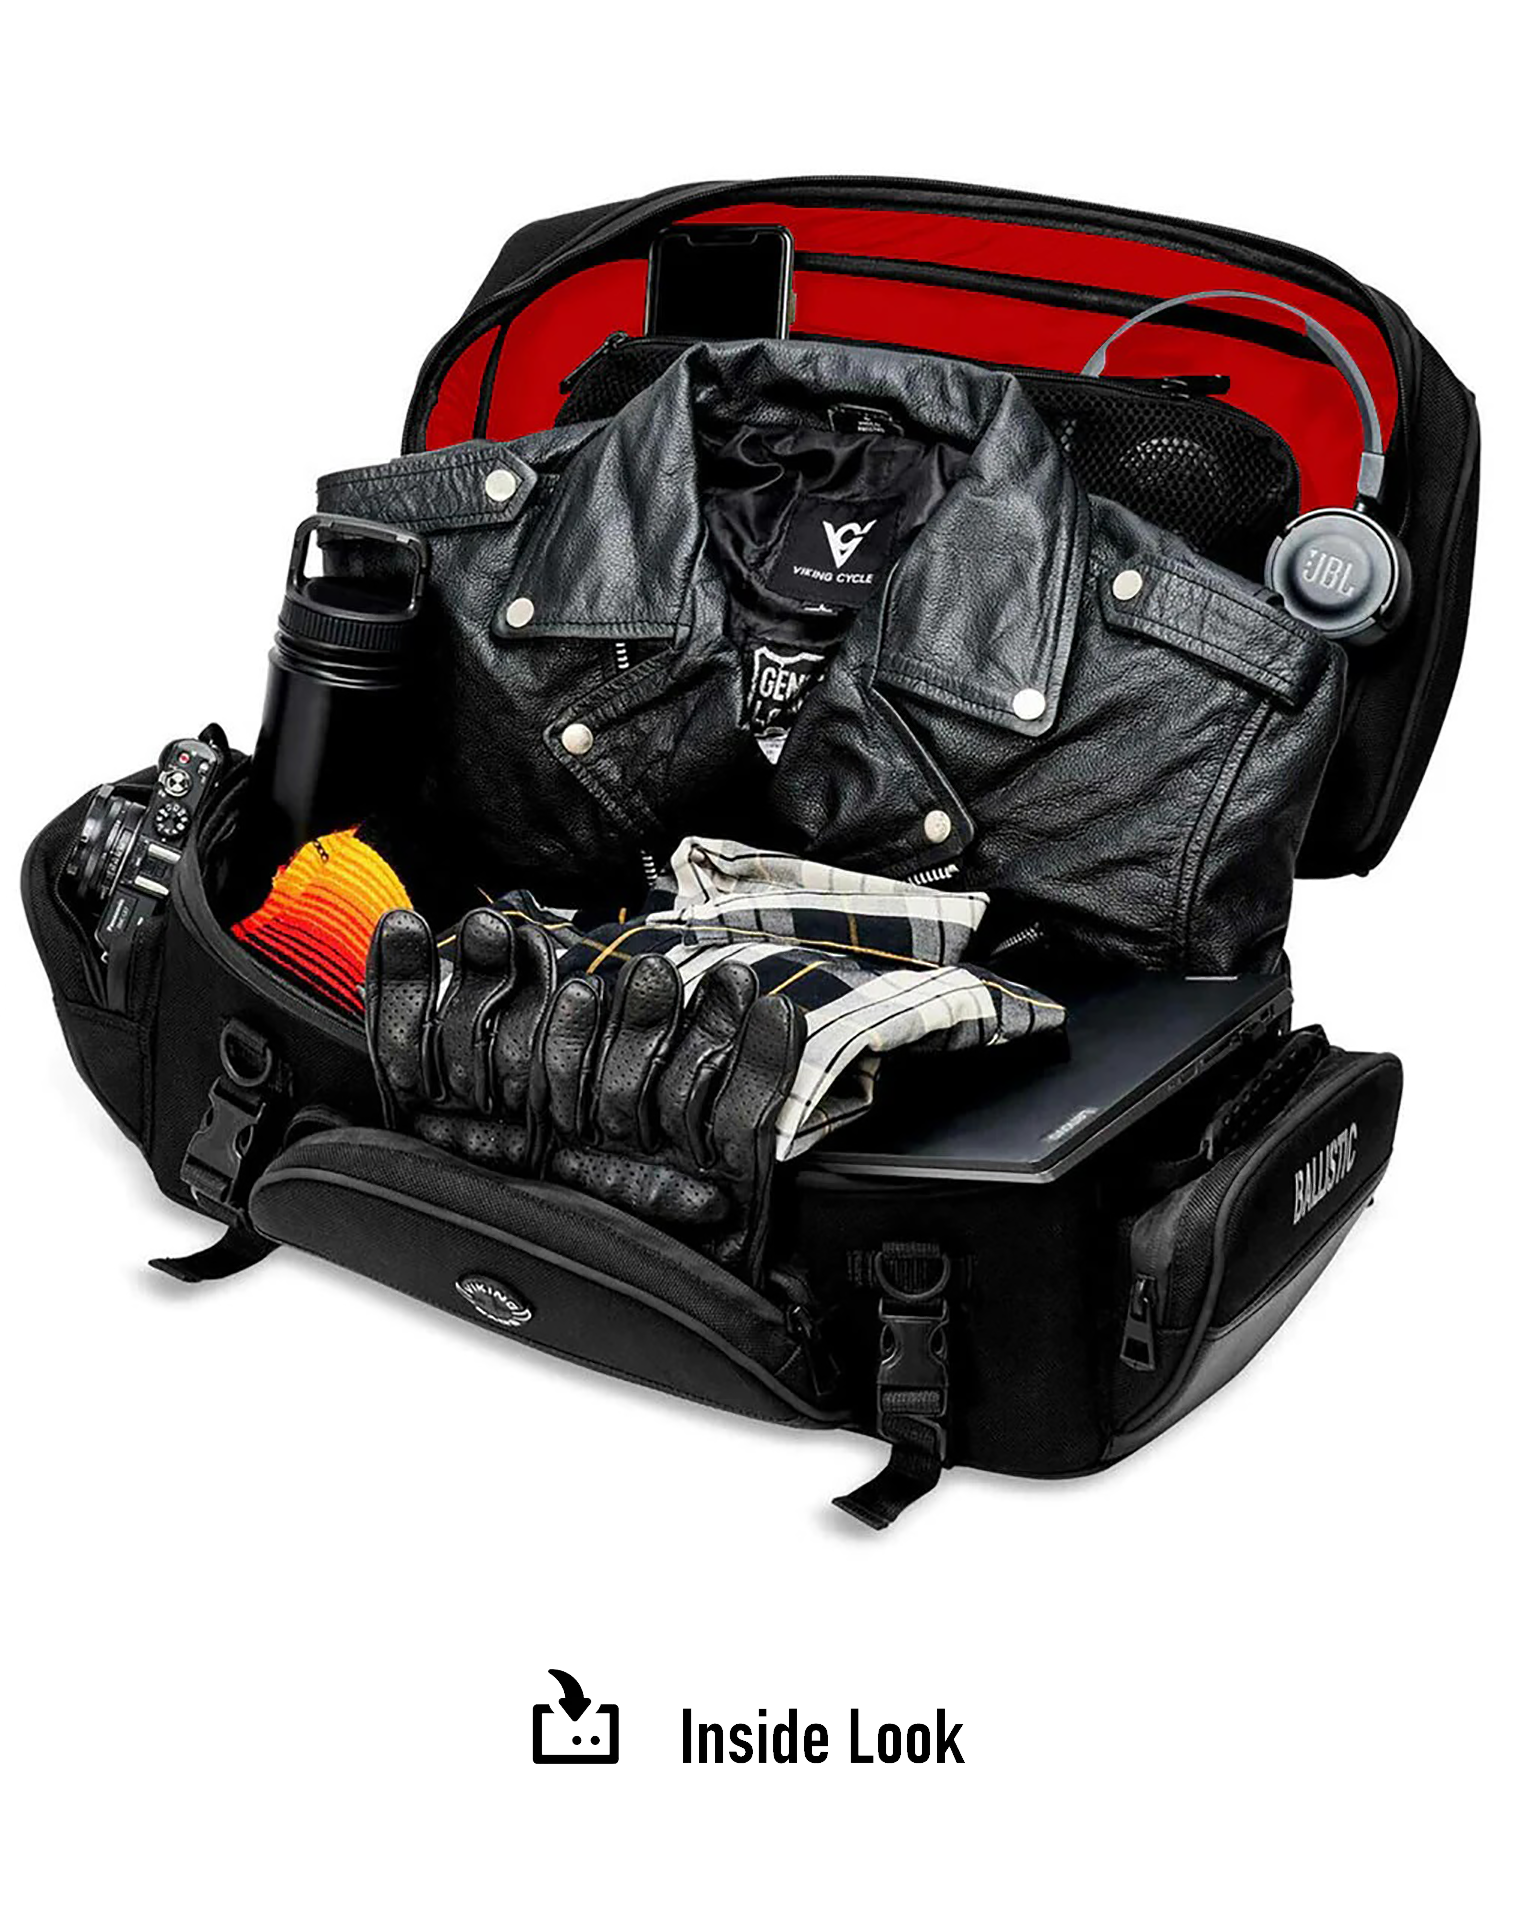 42L - Voyage Elite XL Motorcycle Sissy Bar Bag for Harley Davidson